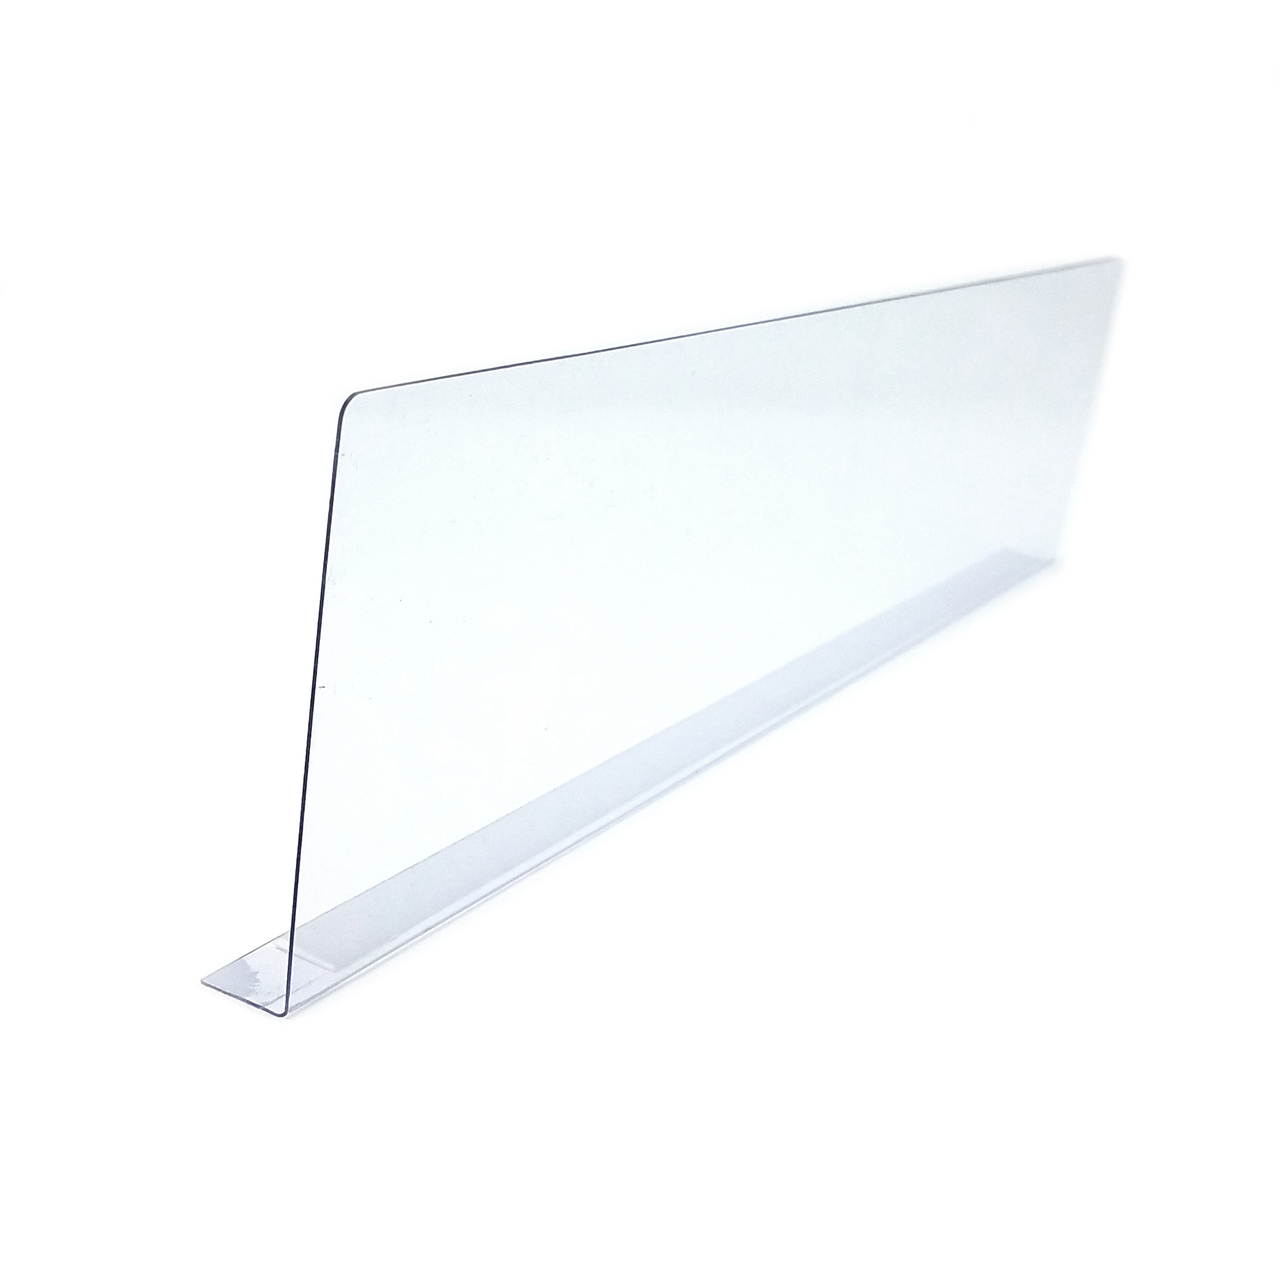 Lishuaiier Clear Shelf Divider - 2 Pack, Clear Acrylic Shelf